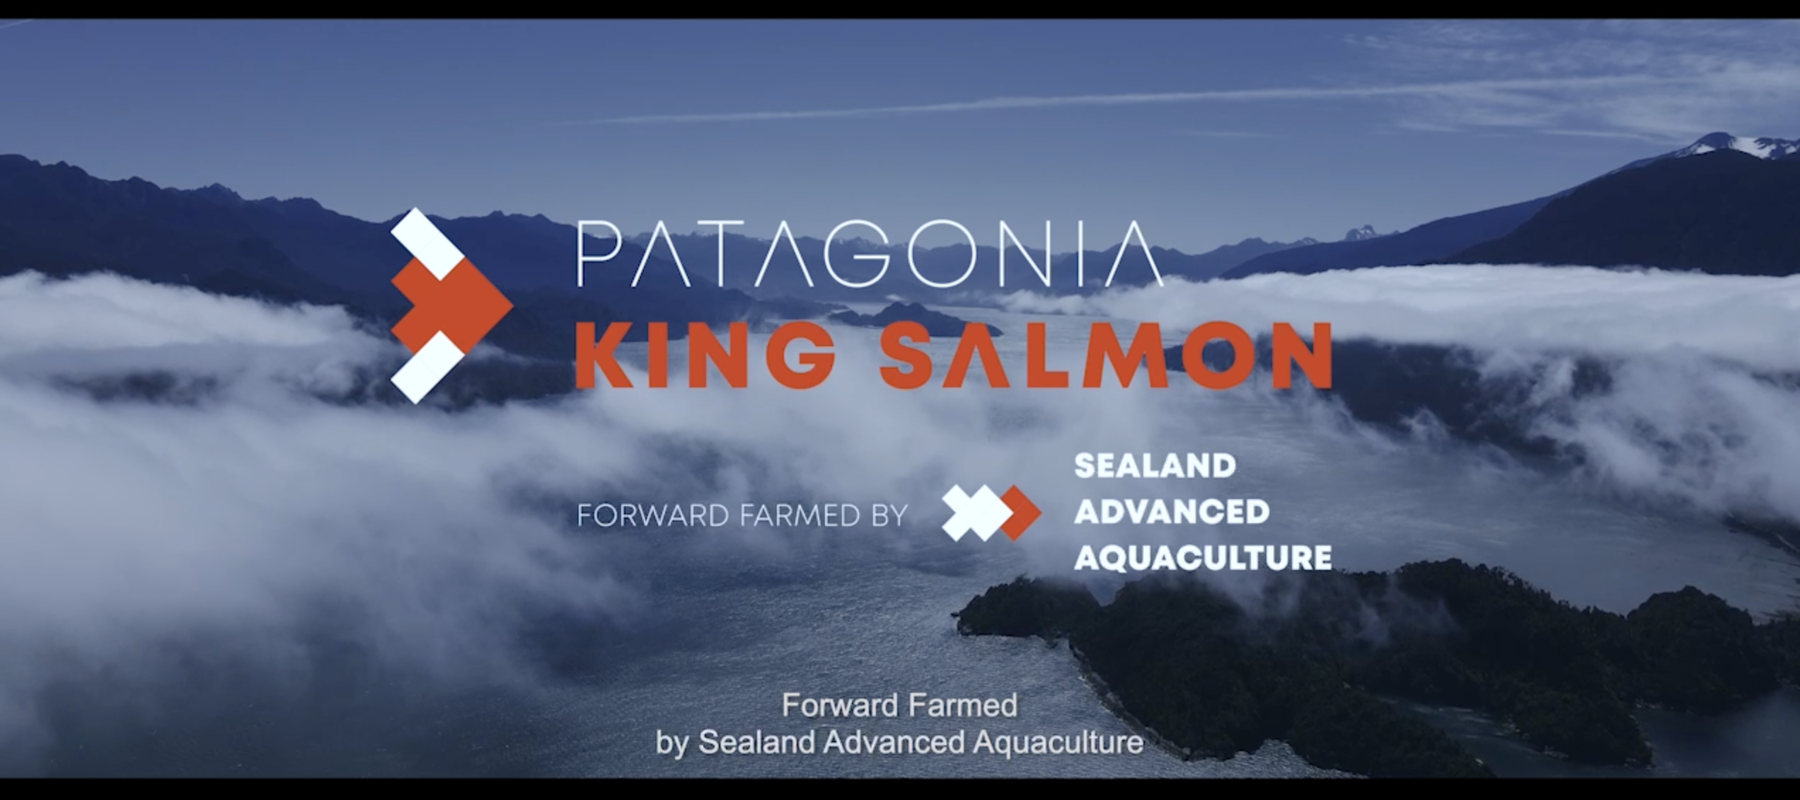 VENGEAN ontwikkelt branding Sealand Advanced Aquaculture en Patagonia King Salmon